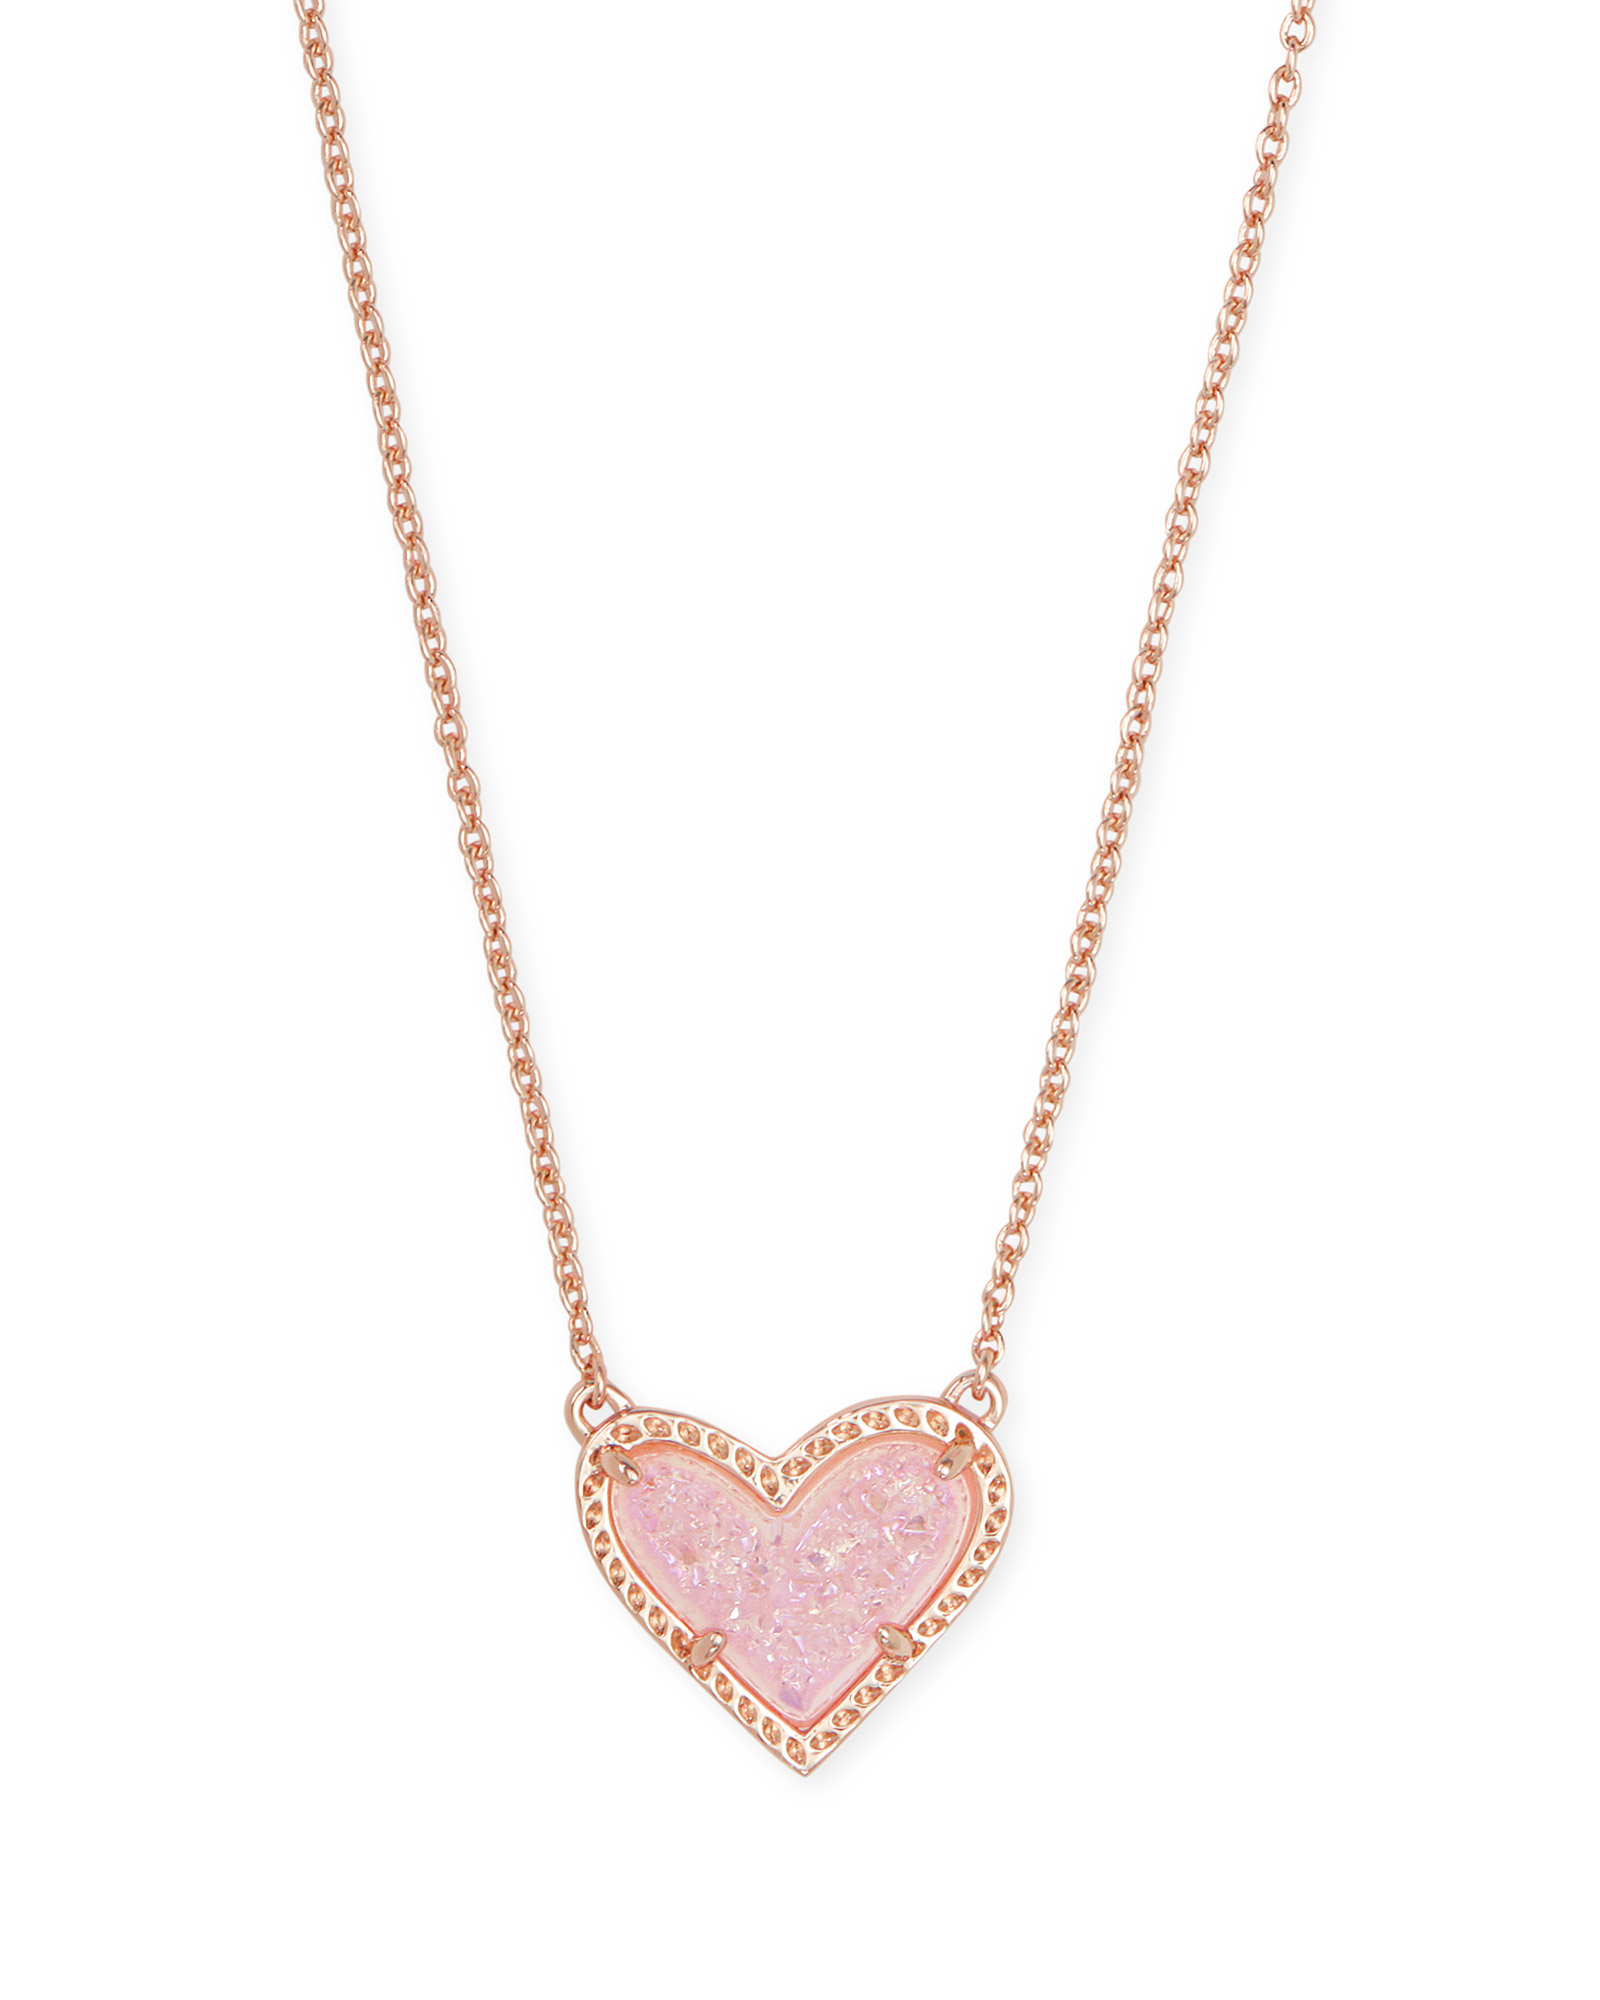 Pandora Heart Necklaces Clearance Sale, Save 62% | jlcatj.gob.mx